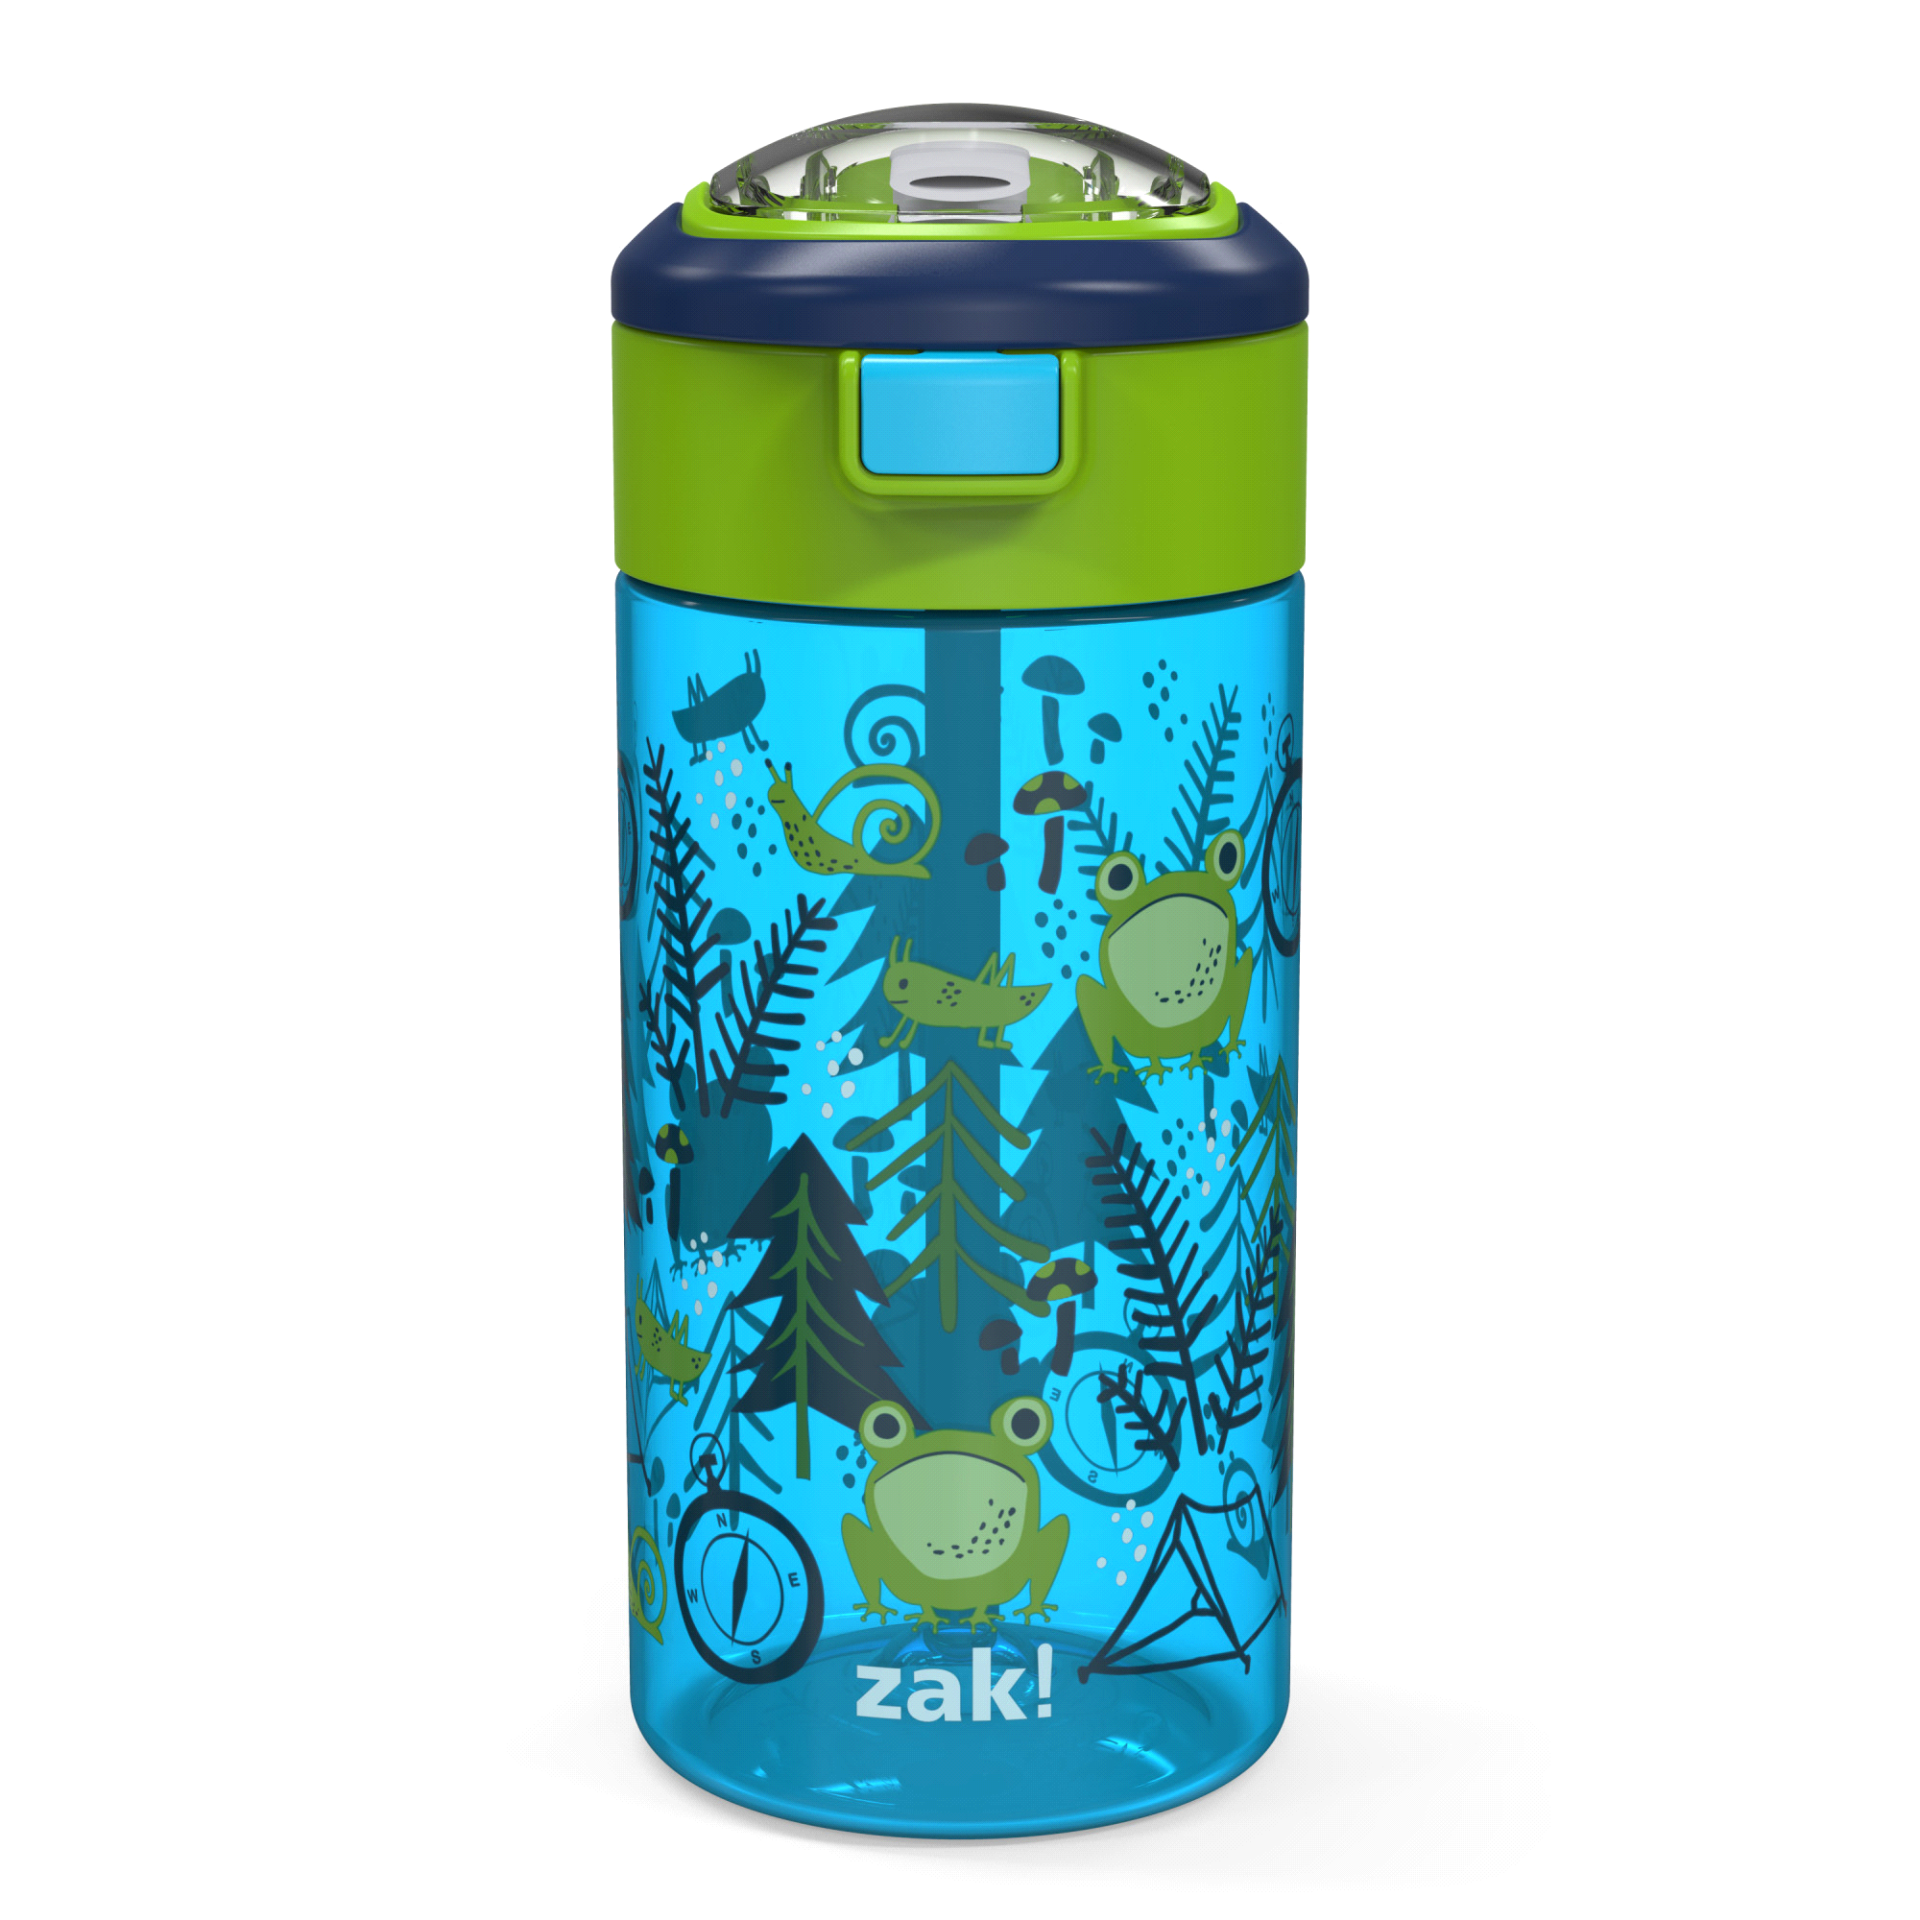 Zak Designs Genesis Flex Reusable Plastic Water Bottle – Camping - Shop  Travel & To-Go at H-E-B